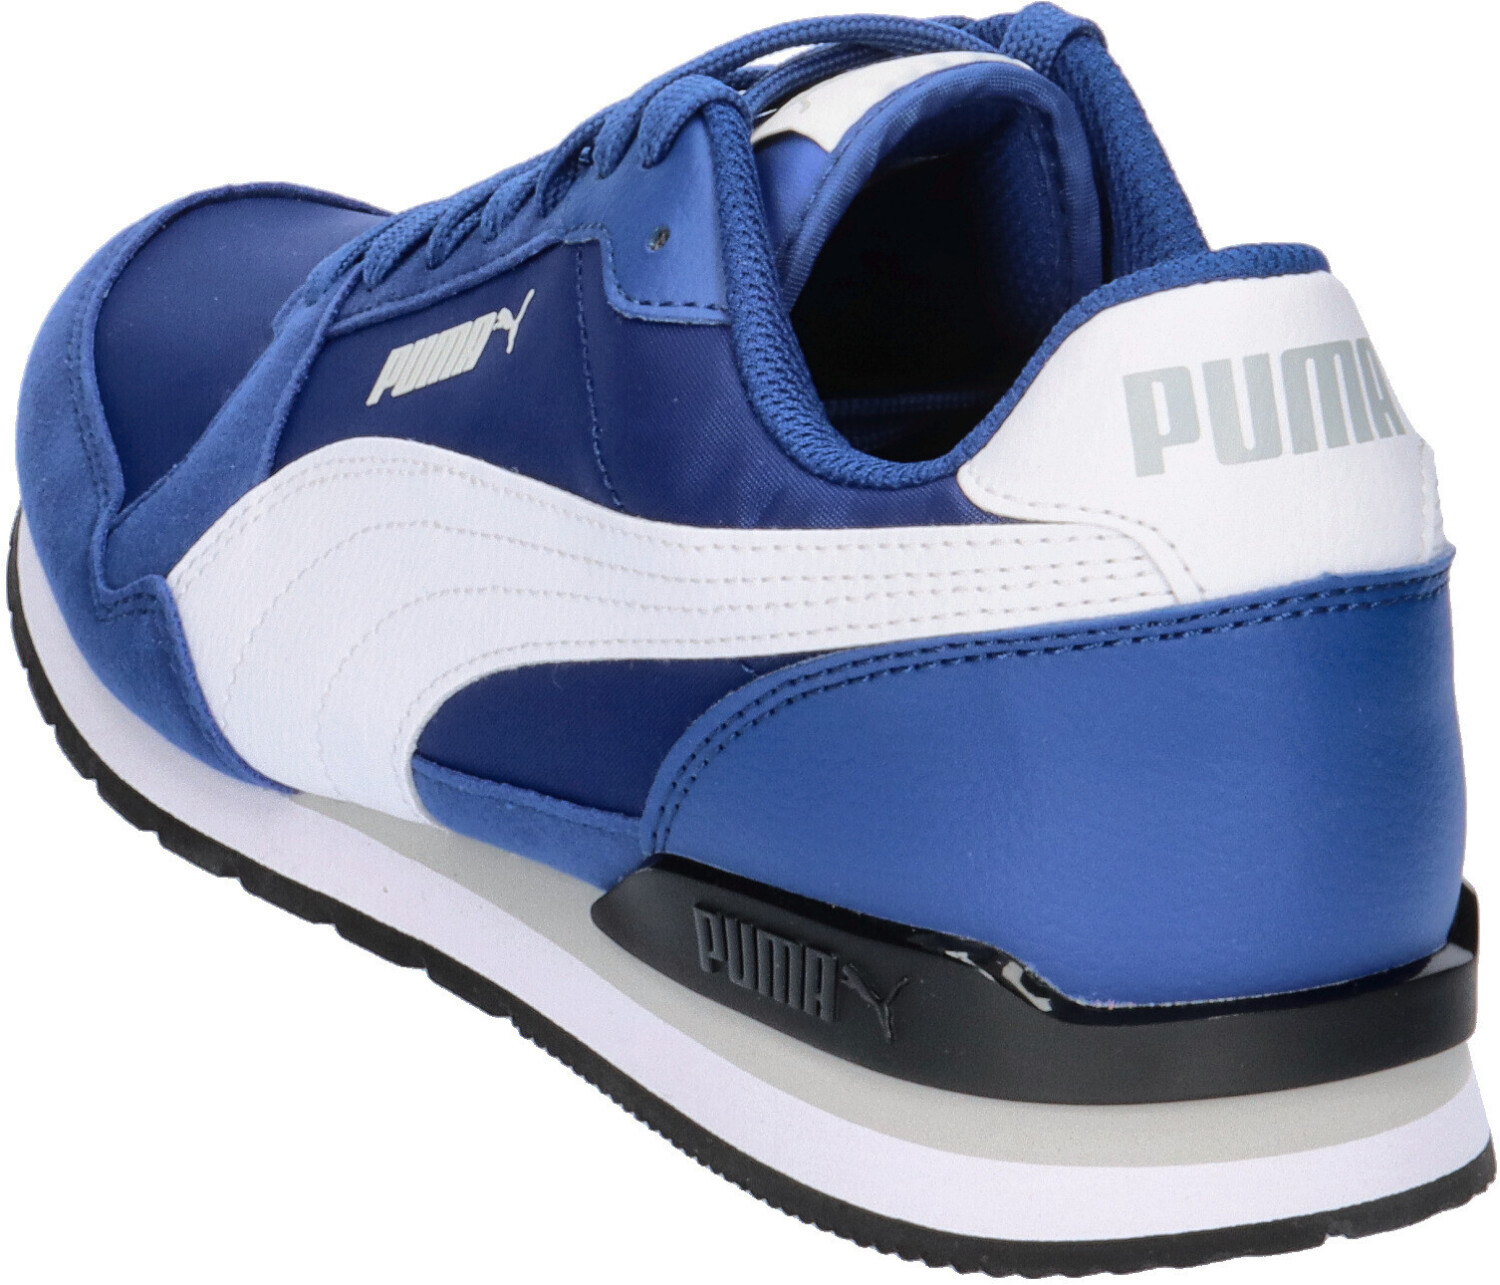 Puma St Runner V3 58,99 ab € Nl 384857 | 16 bei navy Preisvergleich